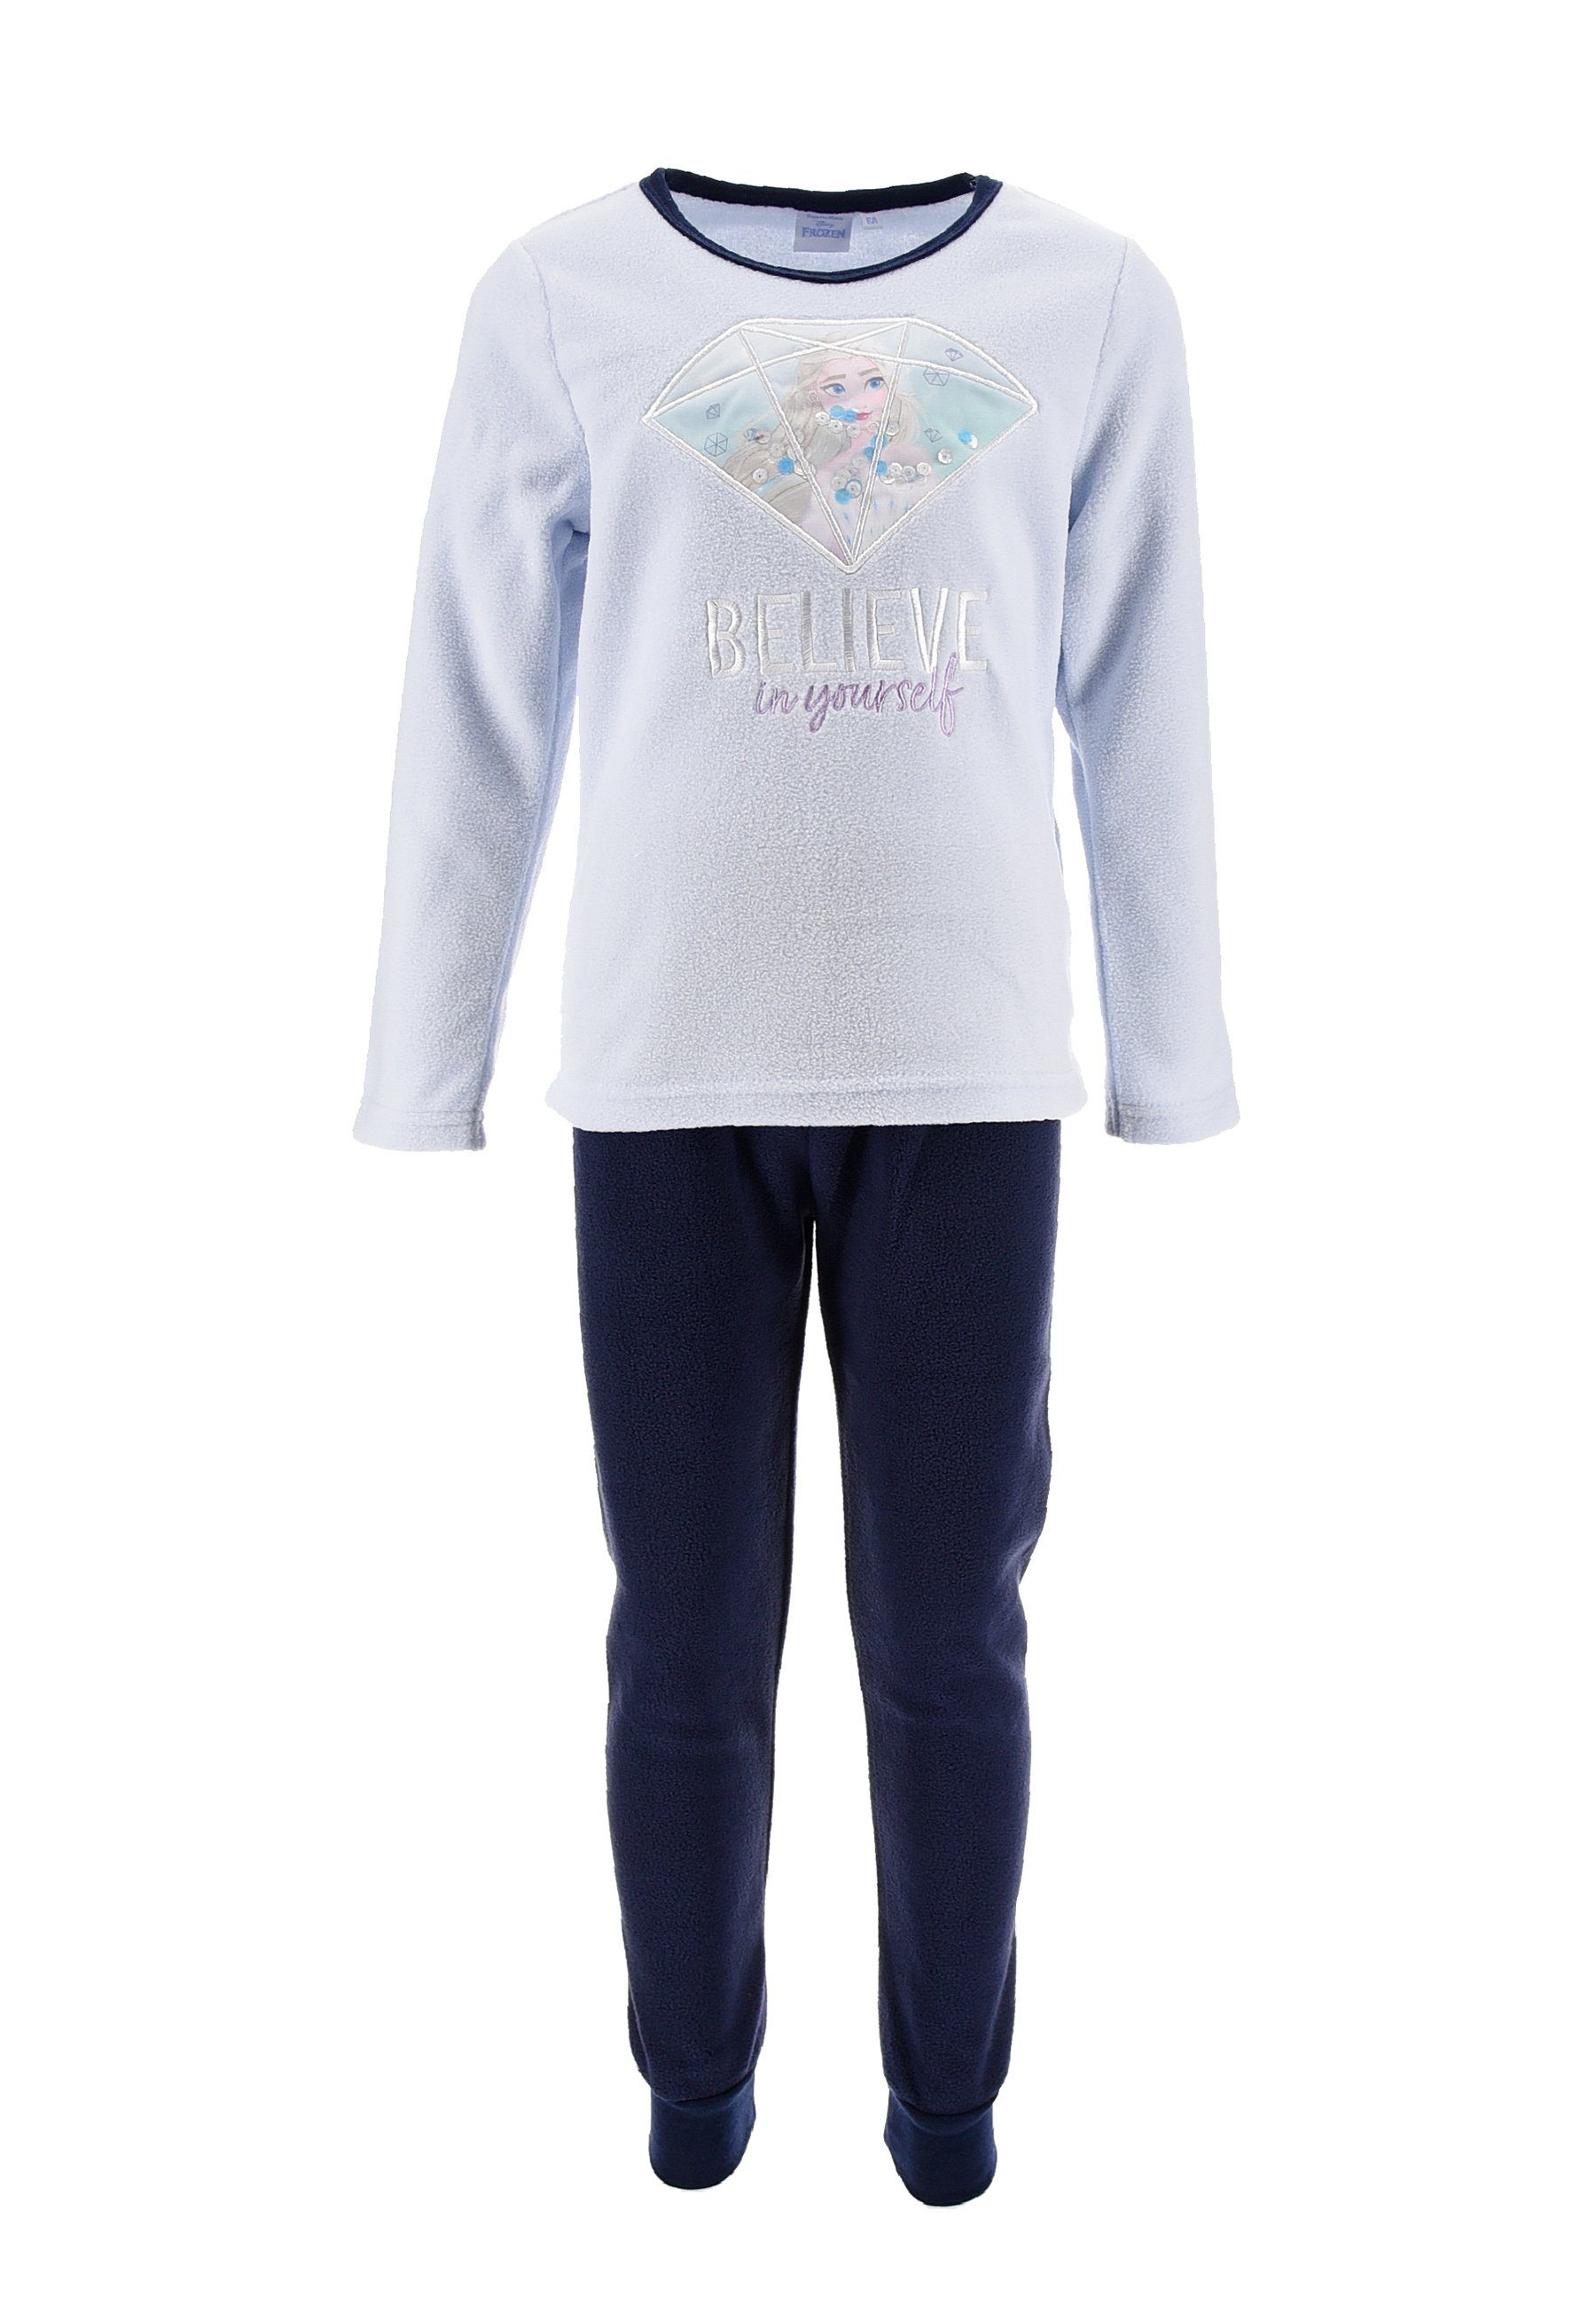 Frozen Kinder Mädchen Schlafanzug Set Pyjama Langarm Elsa Anna Disney 104-140 